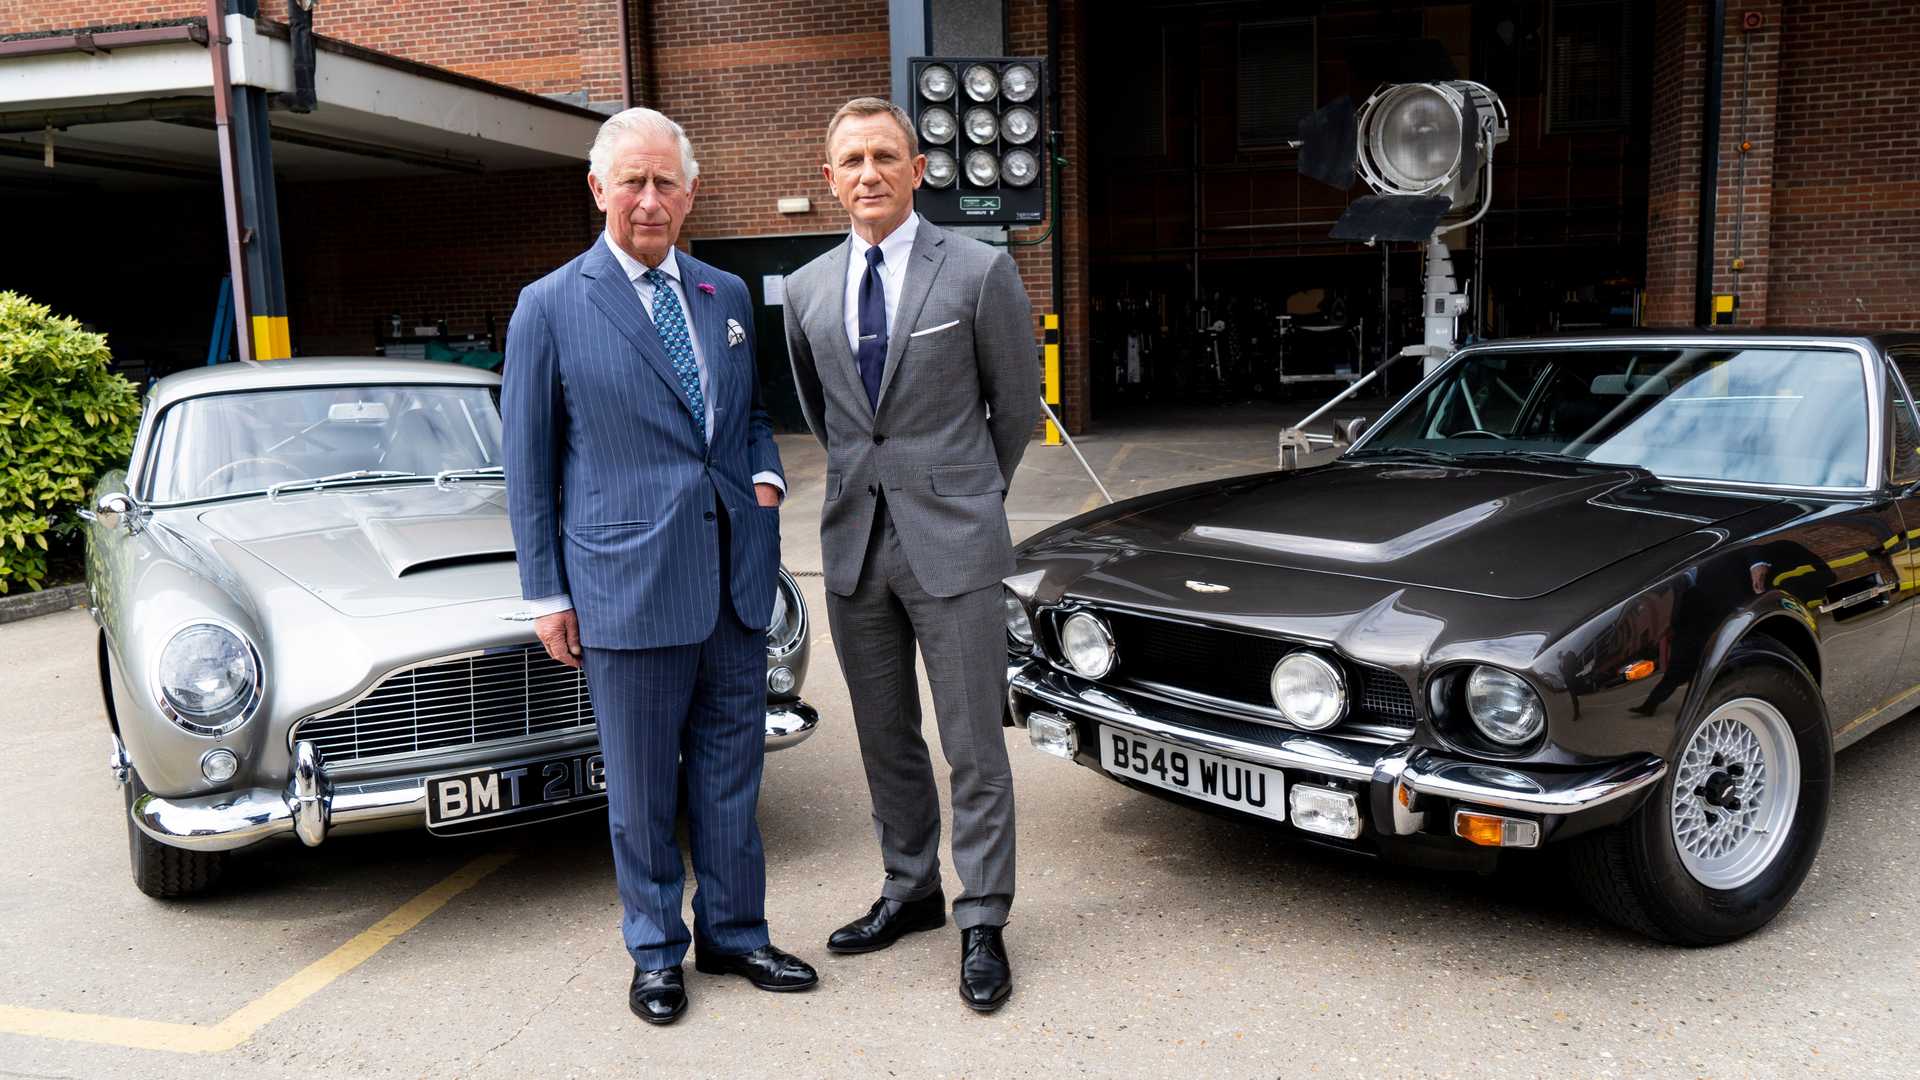 Aston Martin confirms Bond 25 cars during Royal set visit